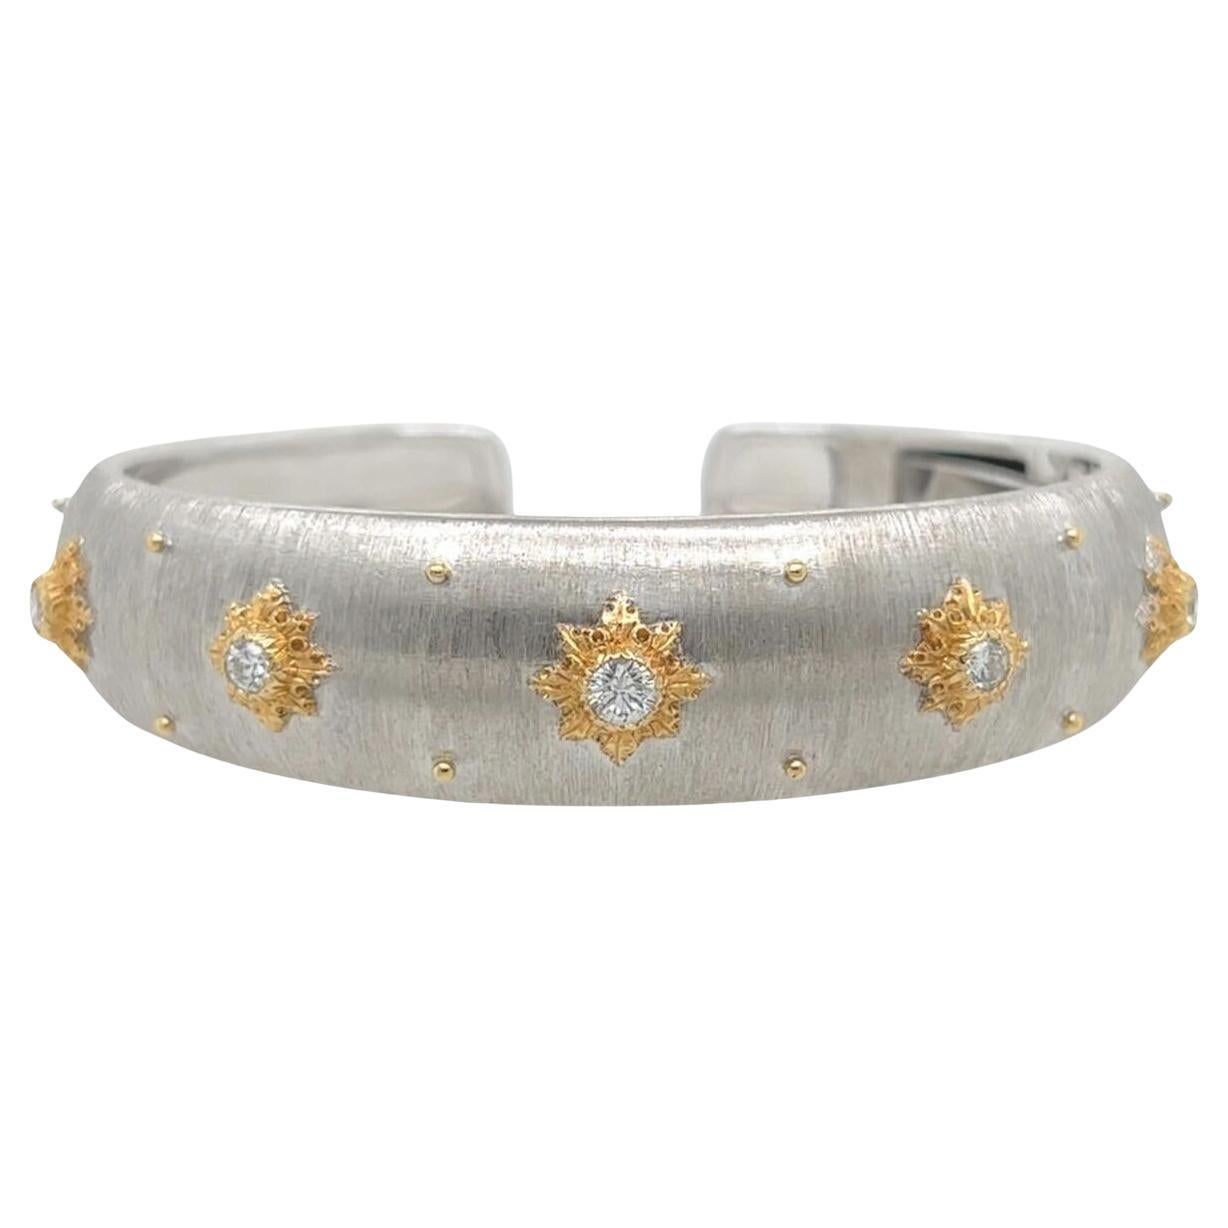 BUCCELLATI White and Yellow Gold and Diamond Cuff Bracelet